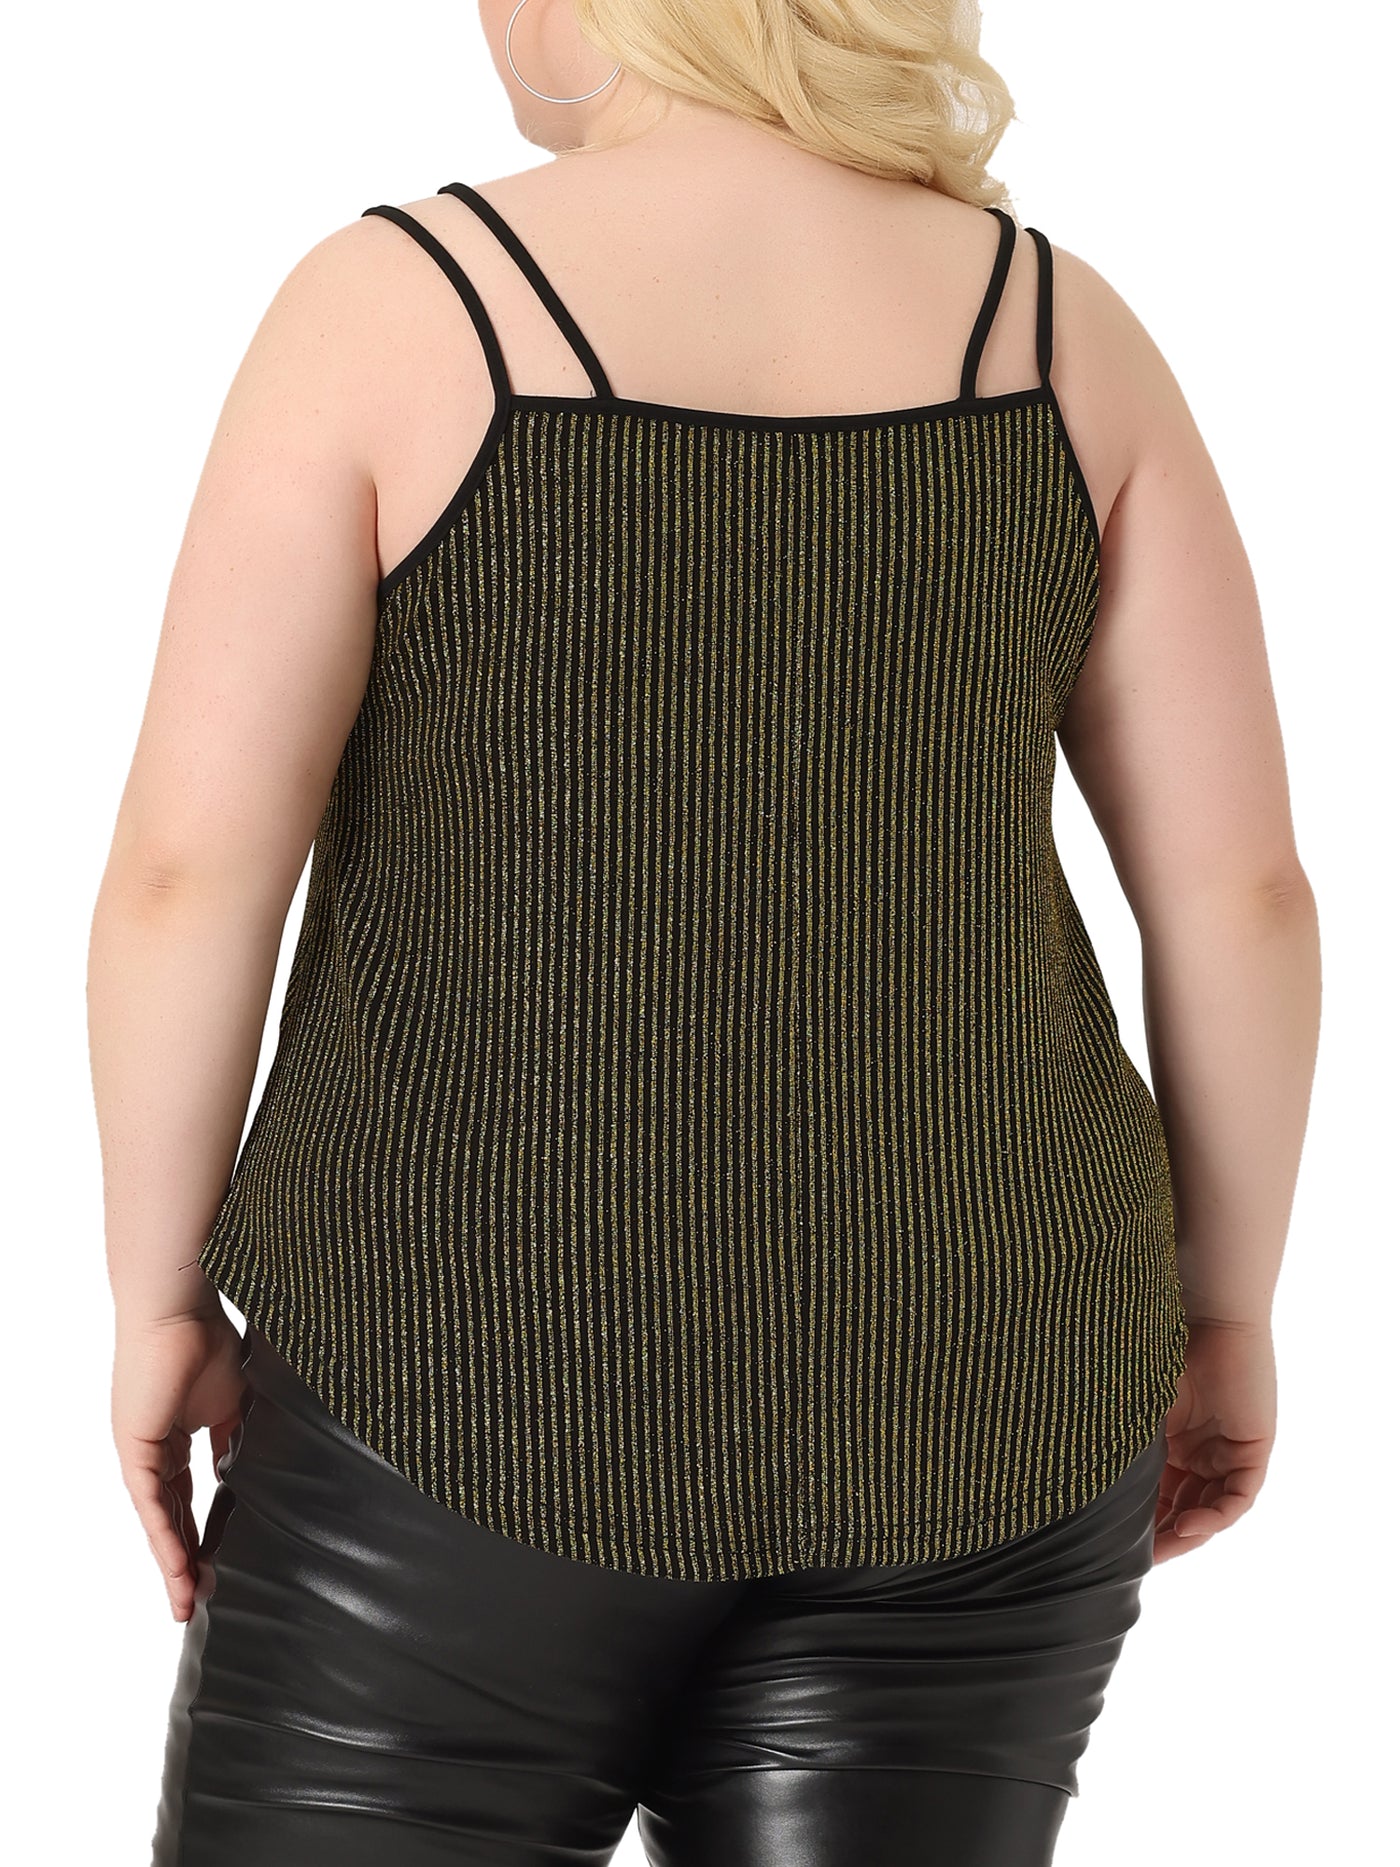 Bublédon Plus Size Camisole for Women V Neck Sparkle Silvery Sleeveless Spaghetti Strap Cami Tank Tops